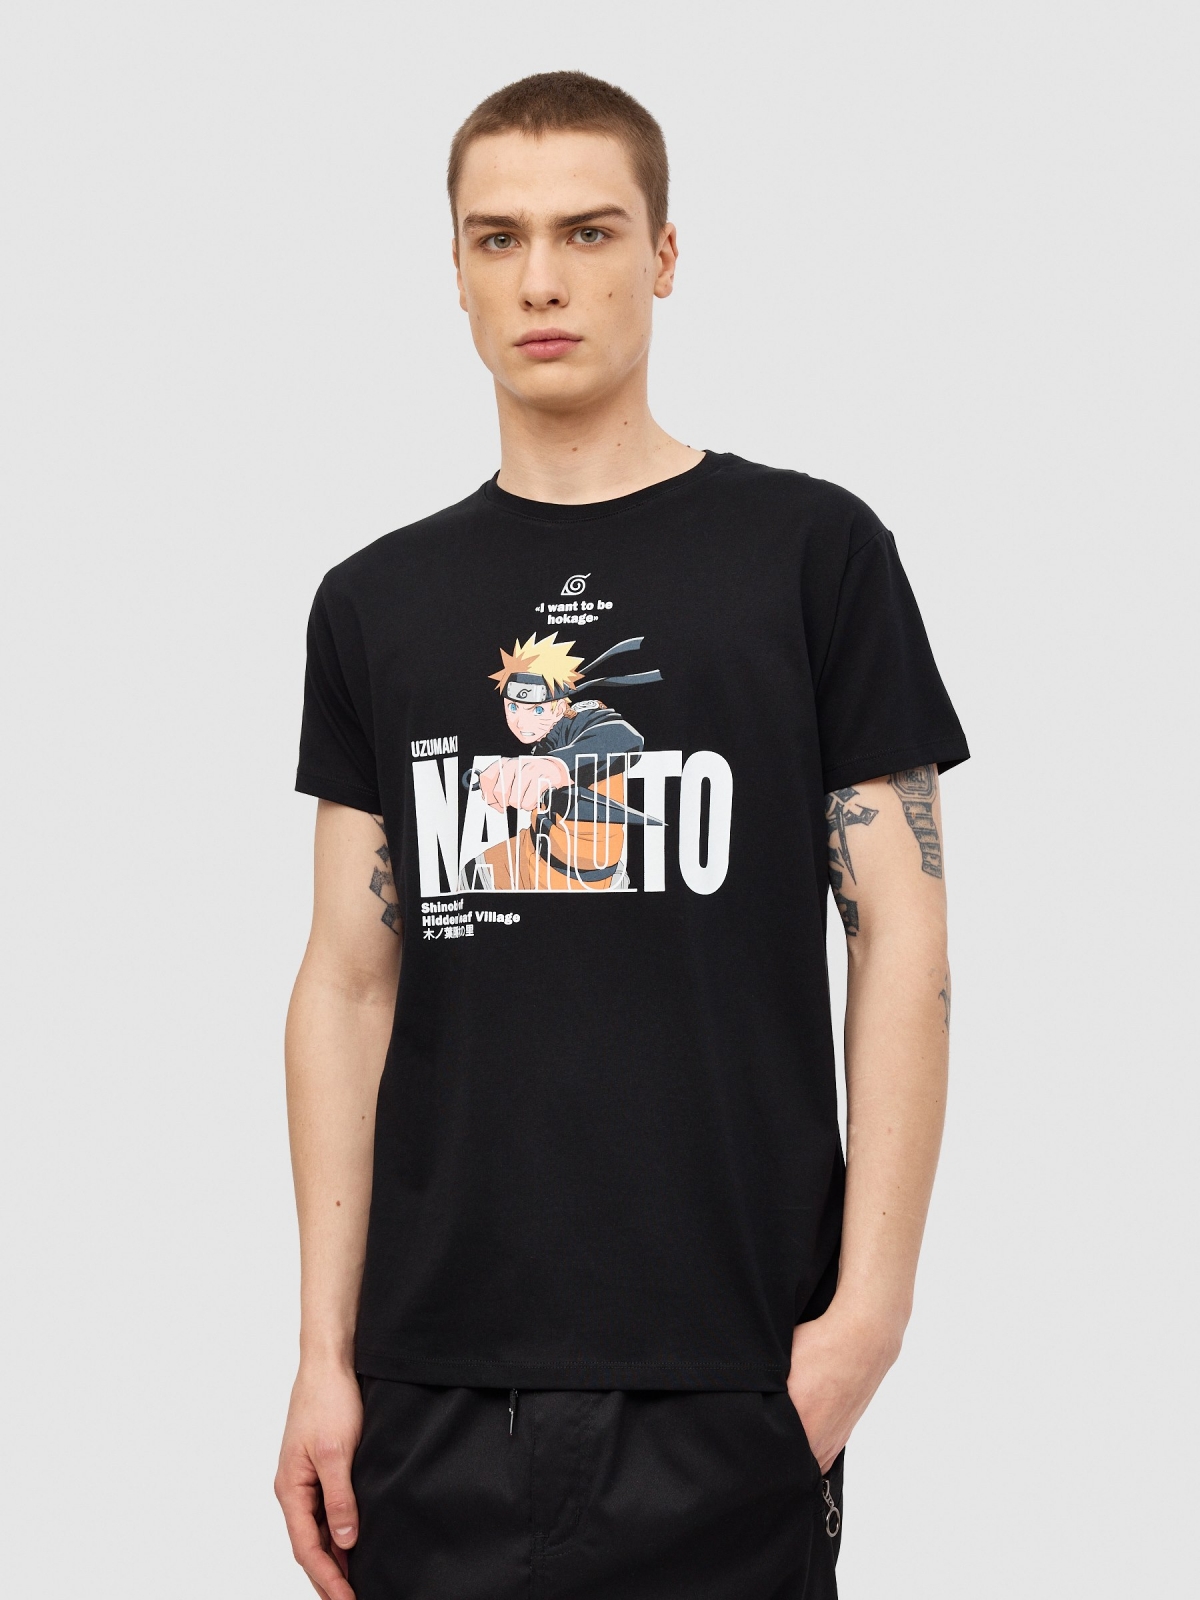 T-shirt Naruto texto preto vista meia frontal